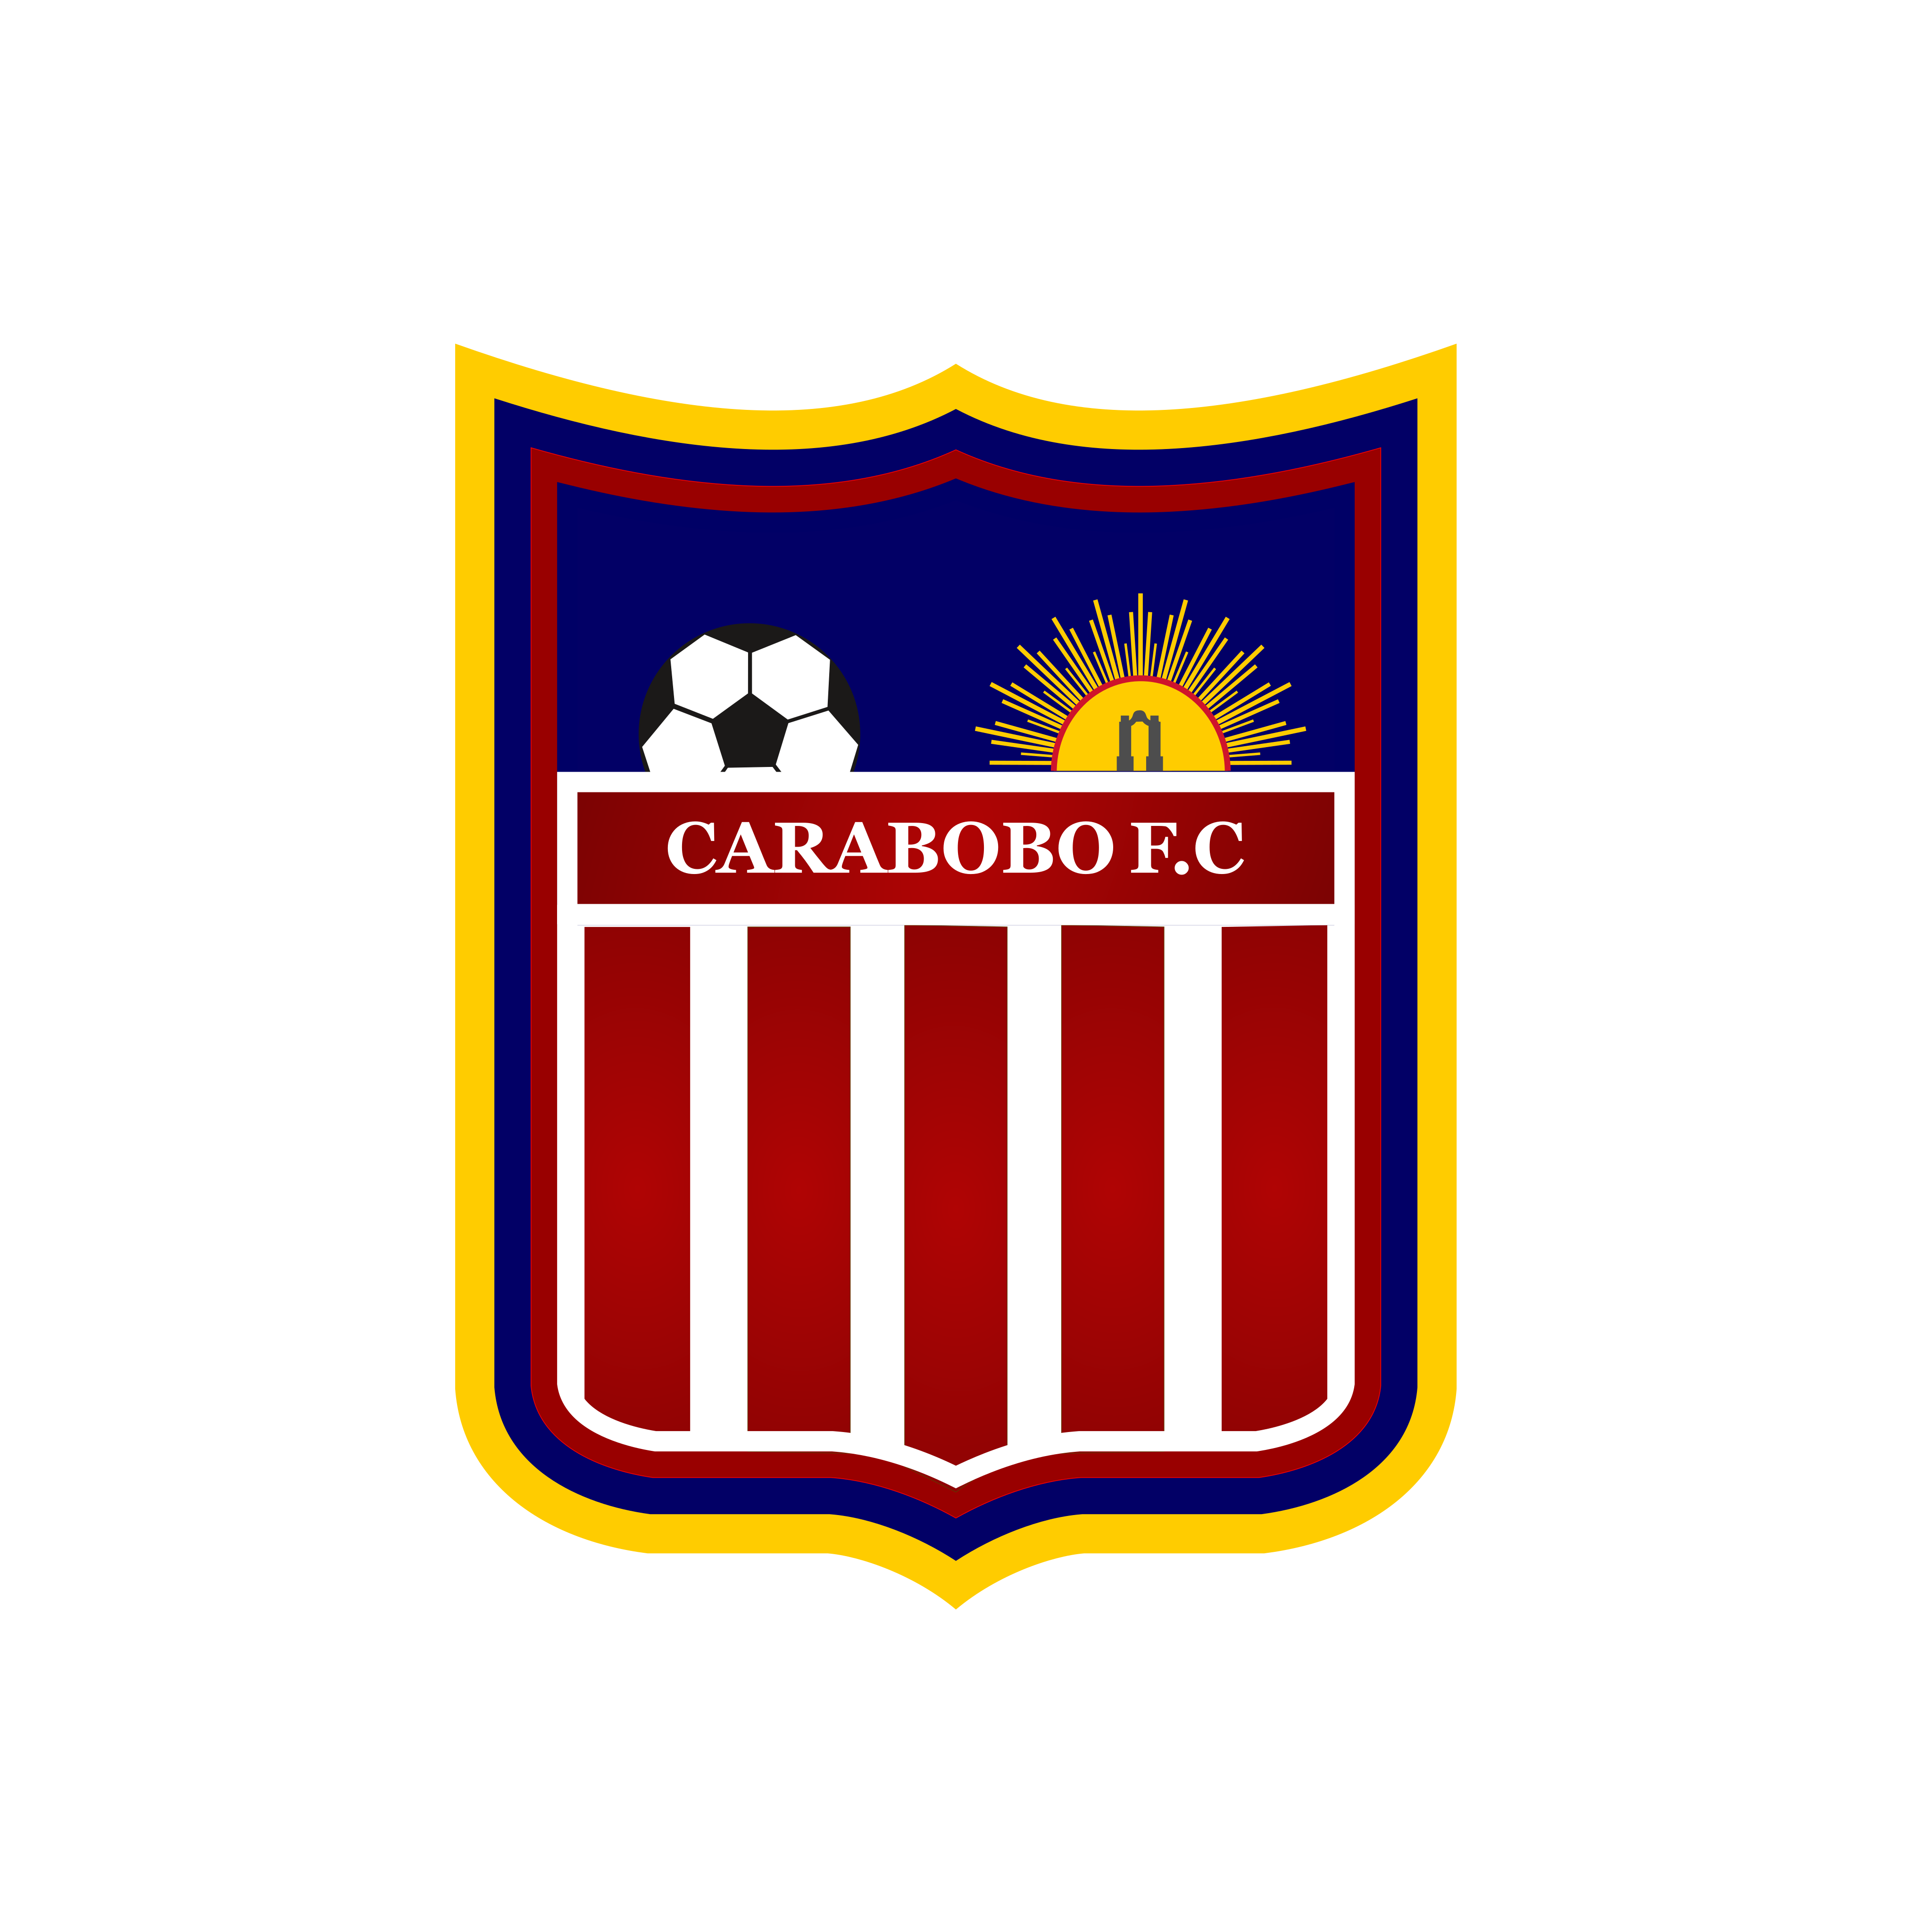 carabobo fc 0 - Carabobo FC Logo